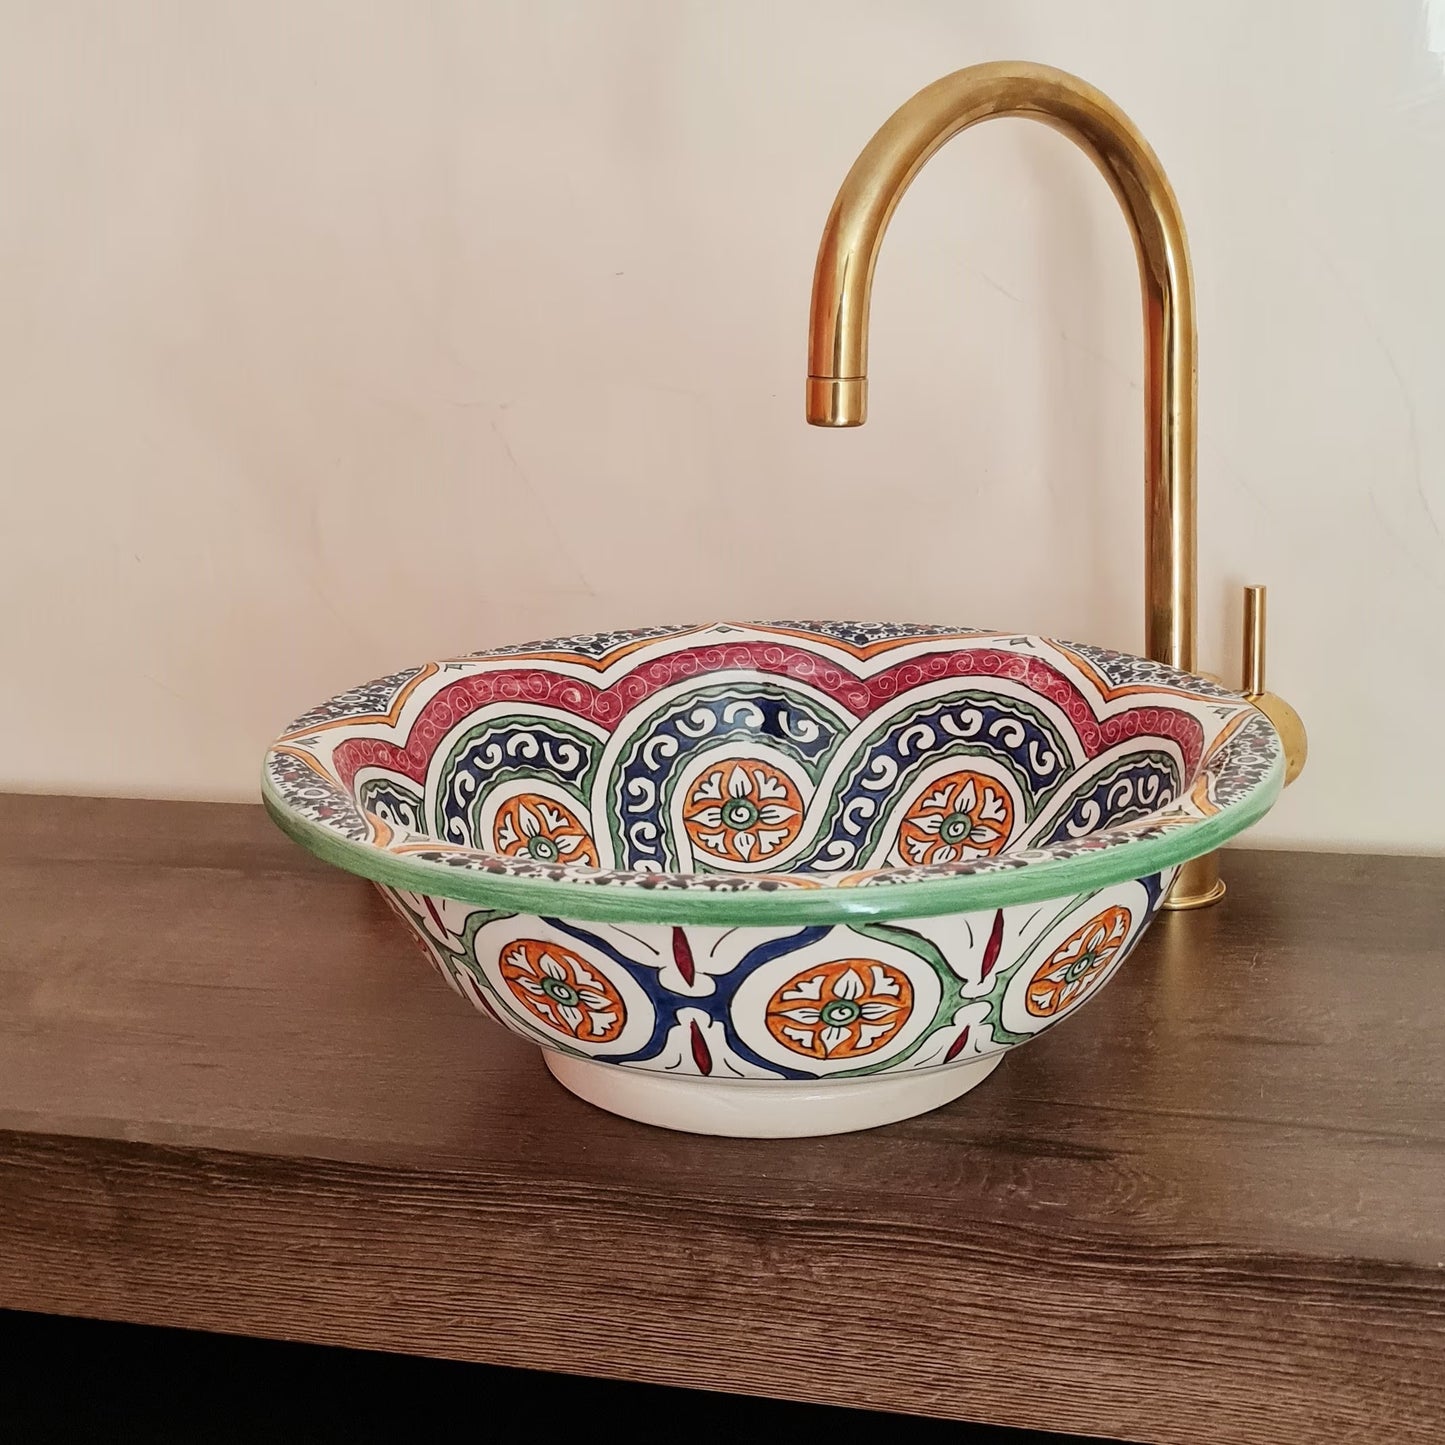 Moroccan sink | moroccan ceramic sink | bathroom sink | moroccan bathroom basin | cloakroom basin | Colorful sink #153